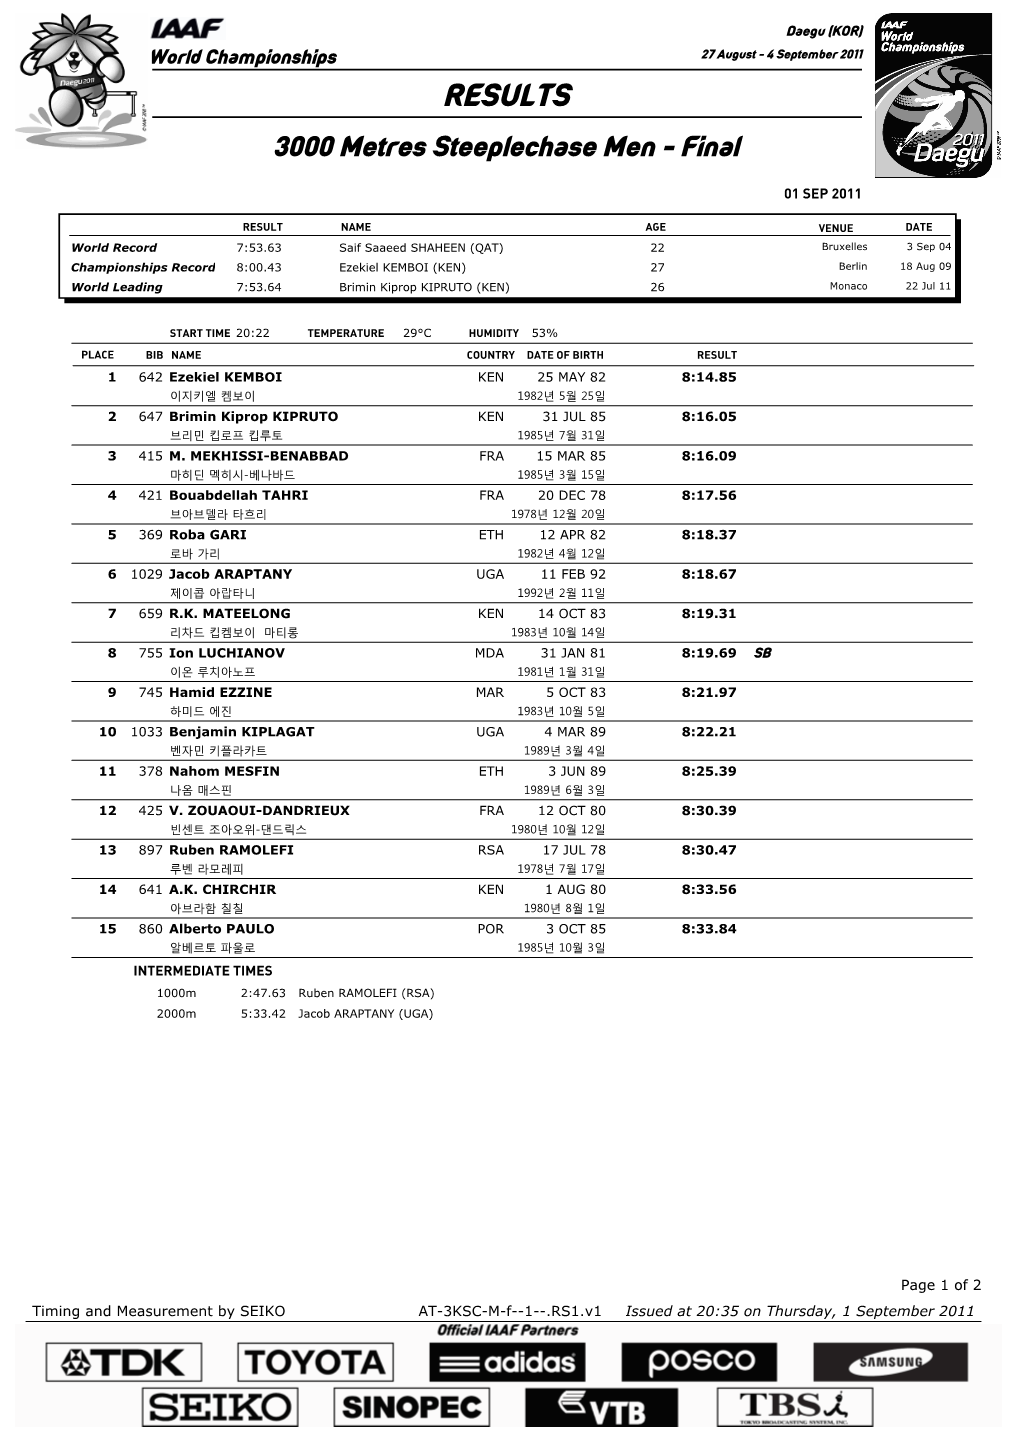 RESULTS 3000 Metres Steeplechase Men - Final